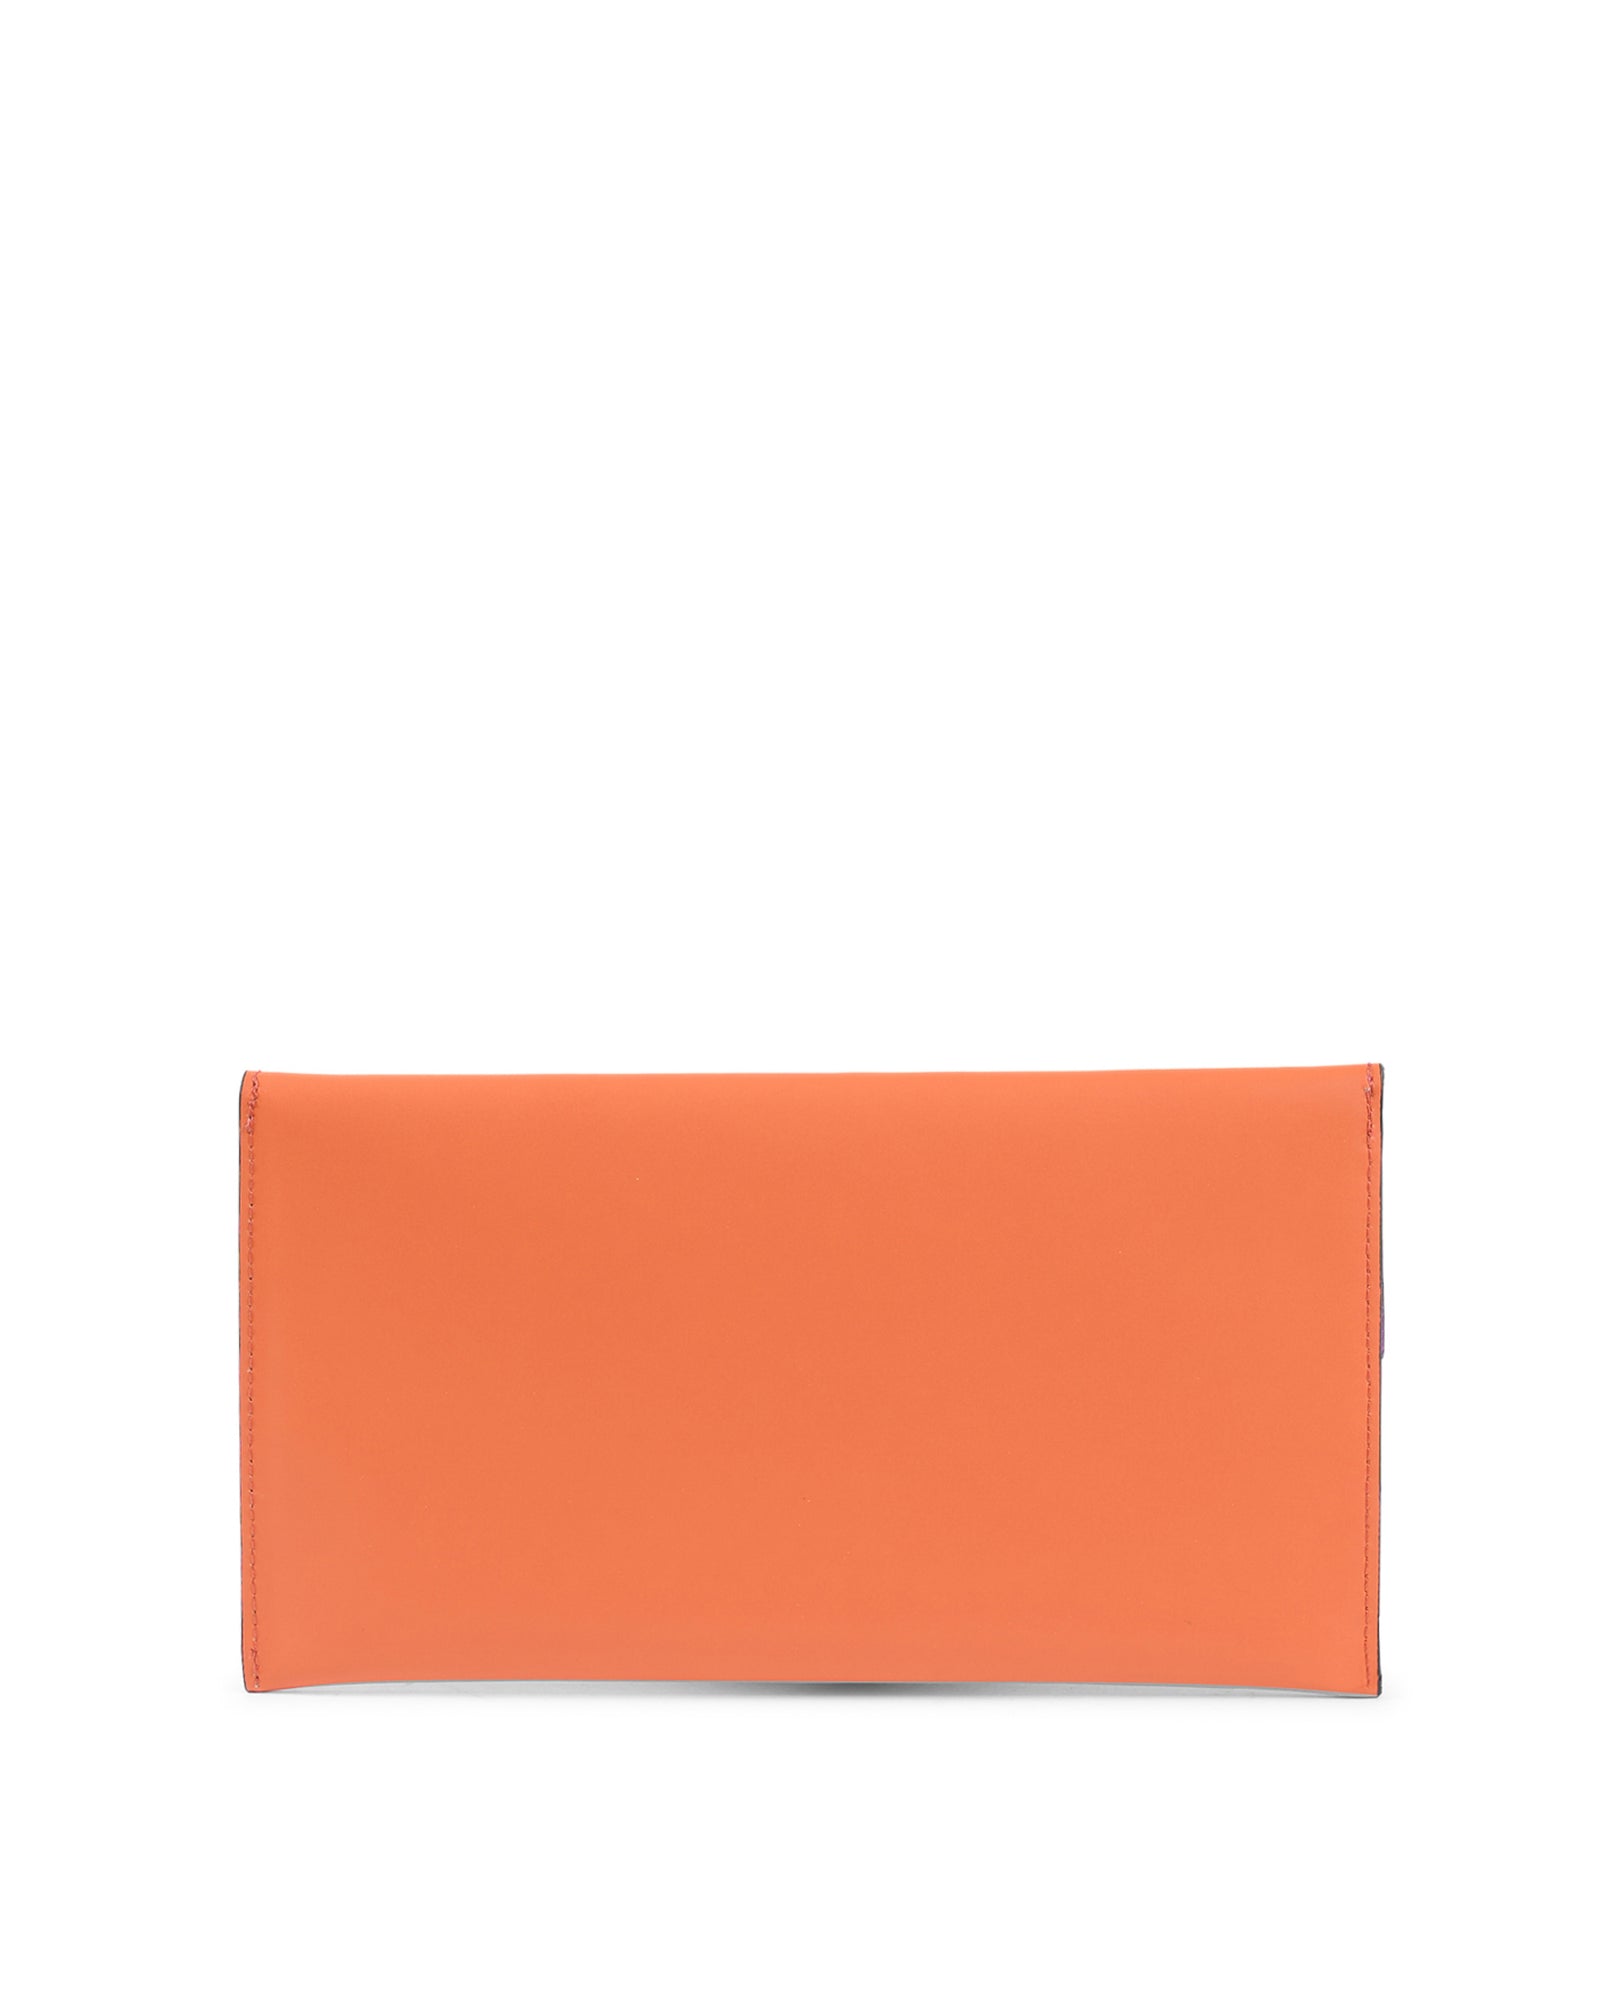 Leather Envelope Clutch - Orange